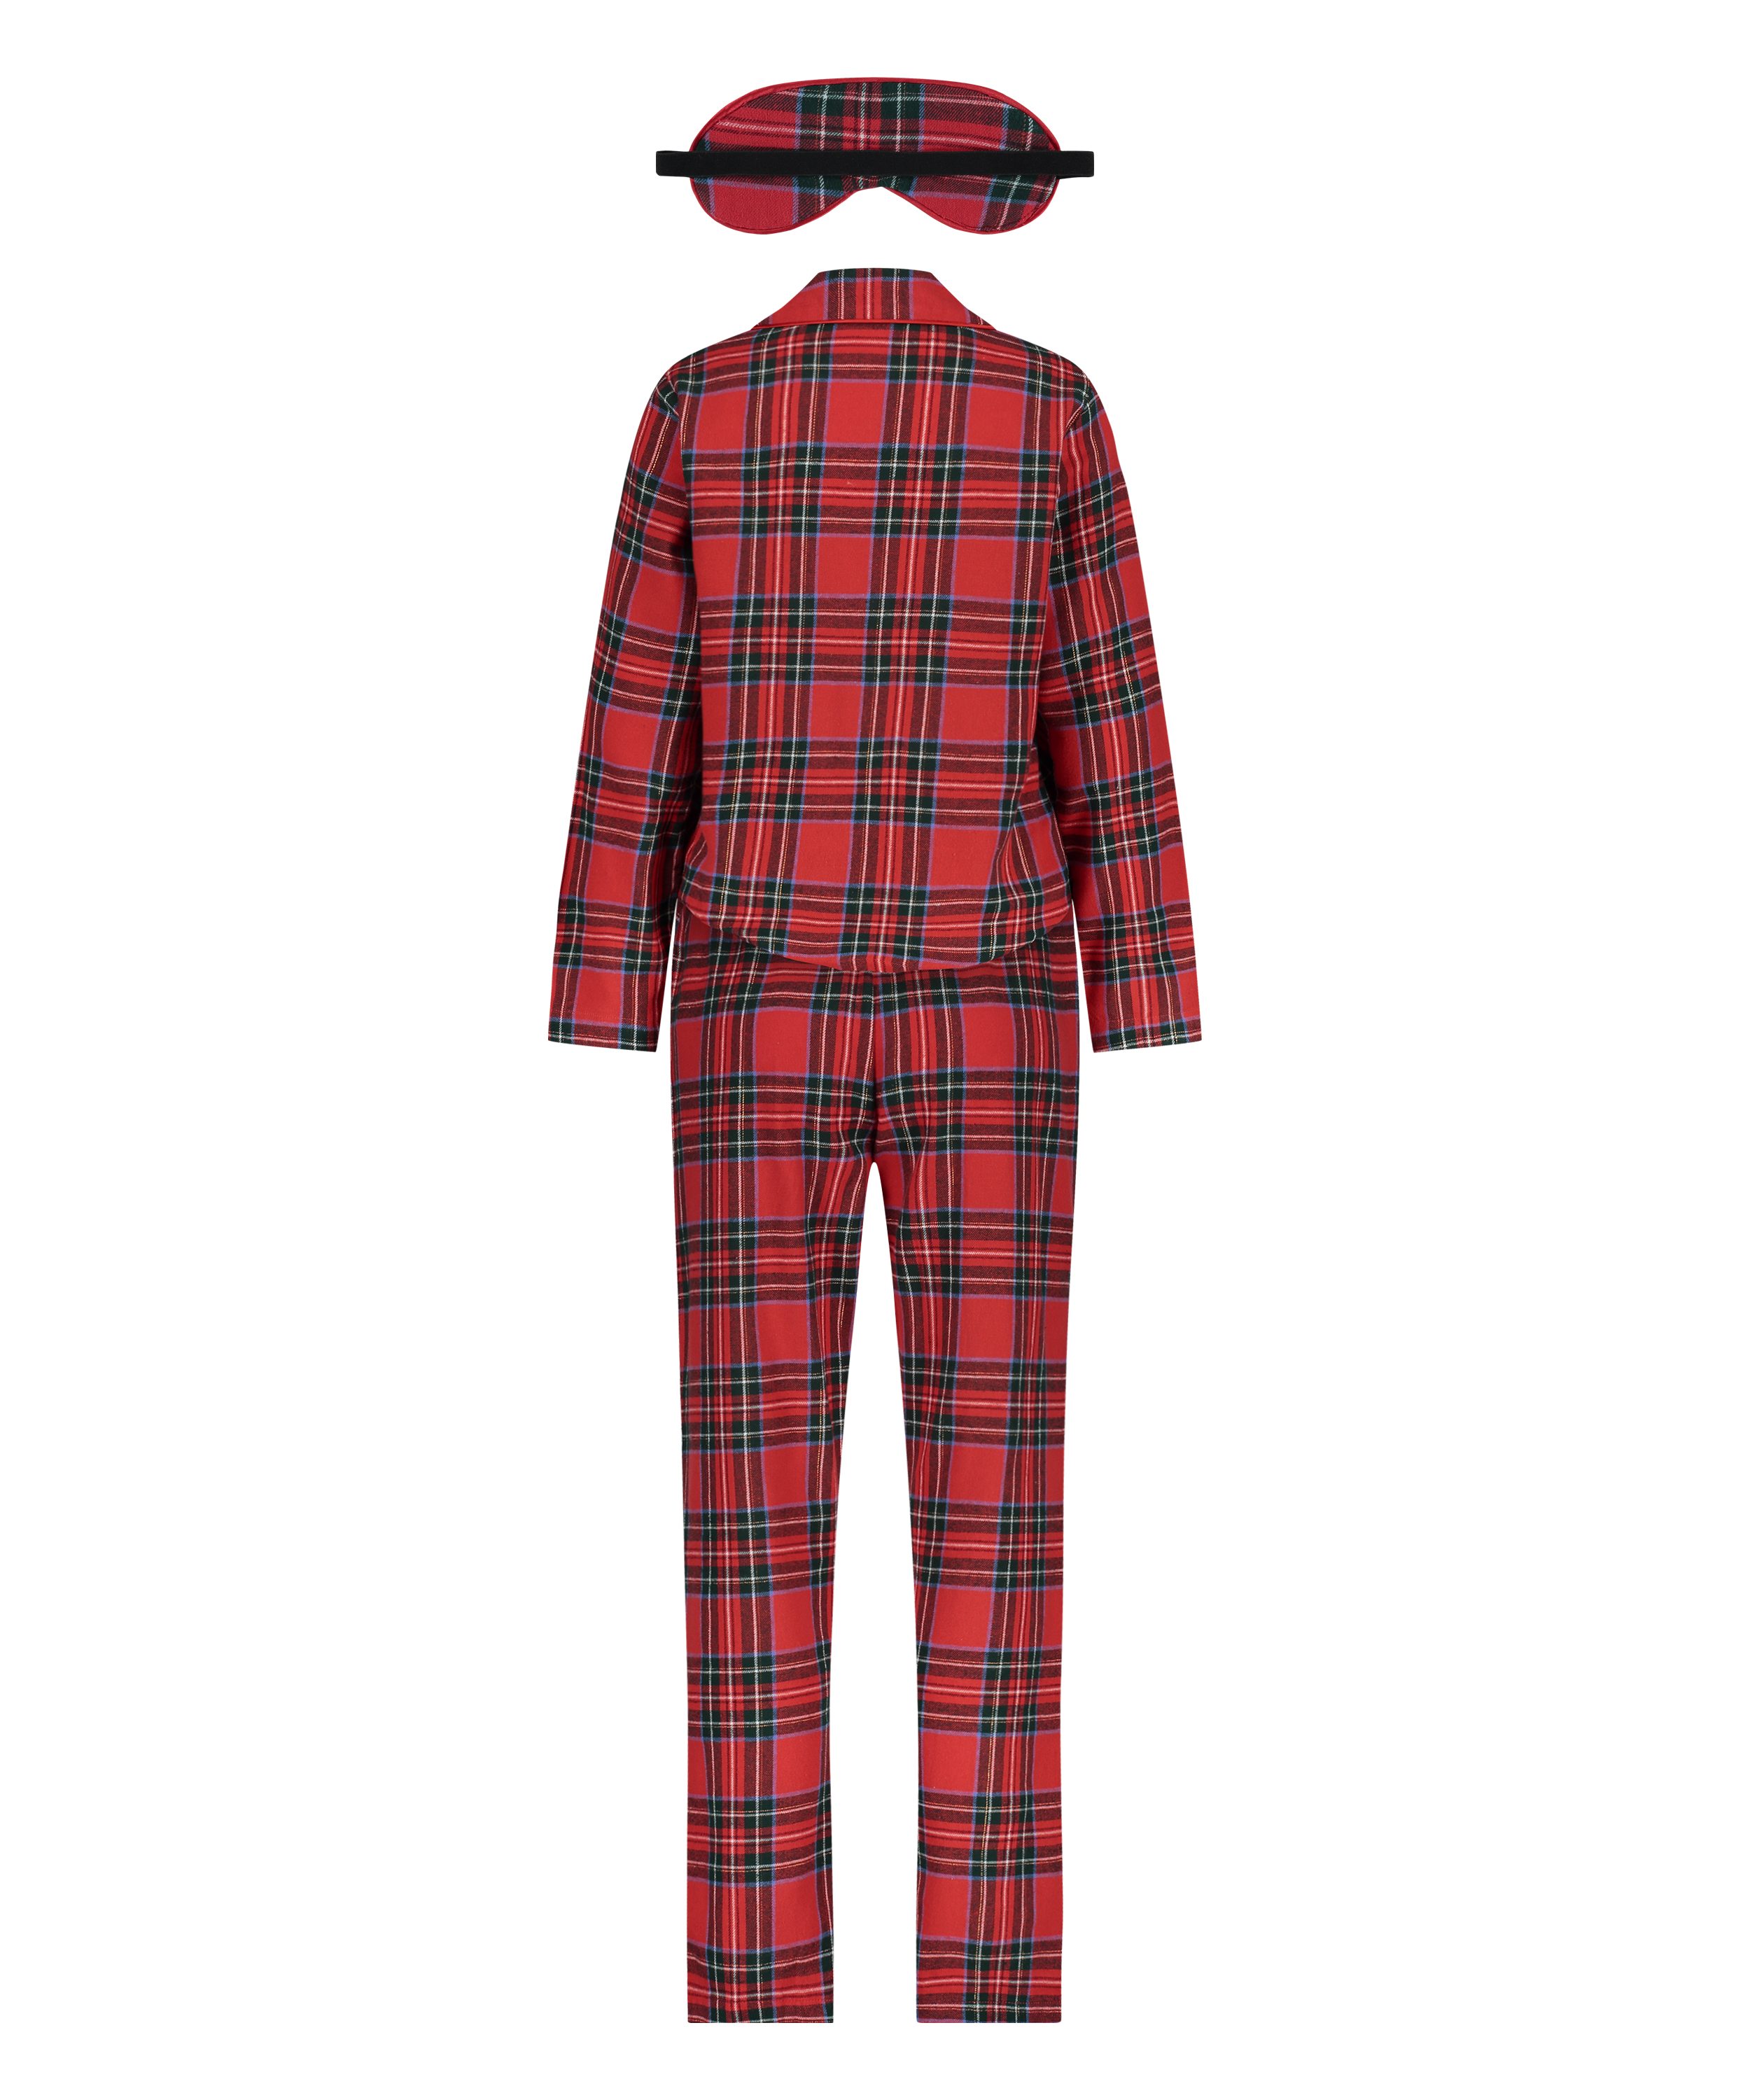 Twill Check Pyjama Set, Red, main